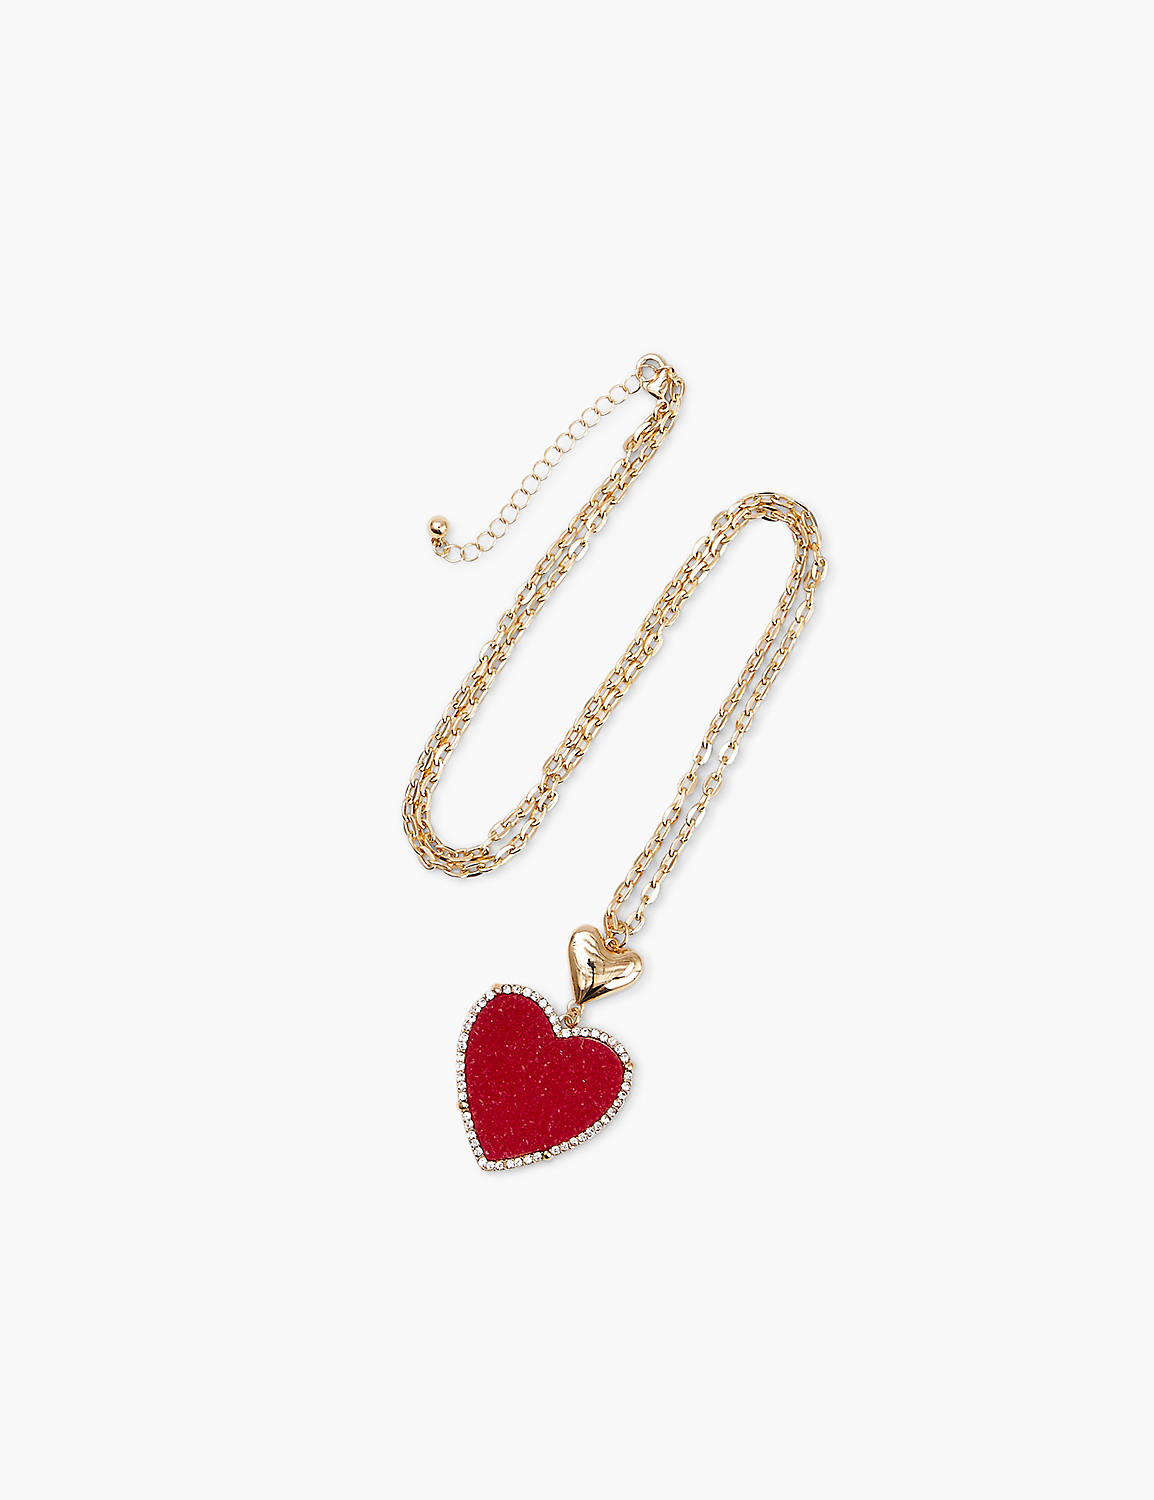 Druzy Heart Pendant Necklace Product Image 1